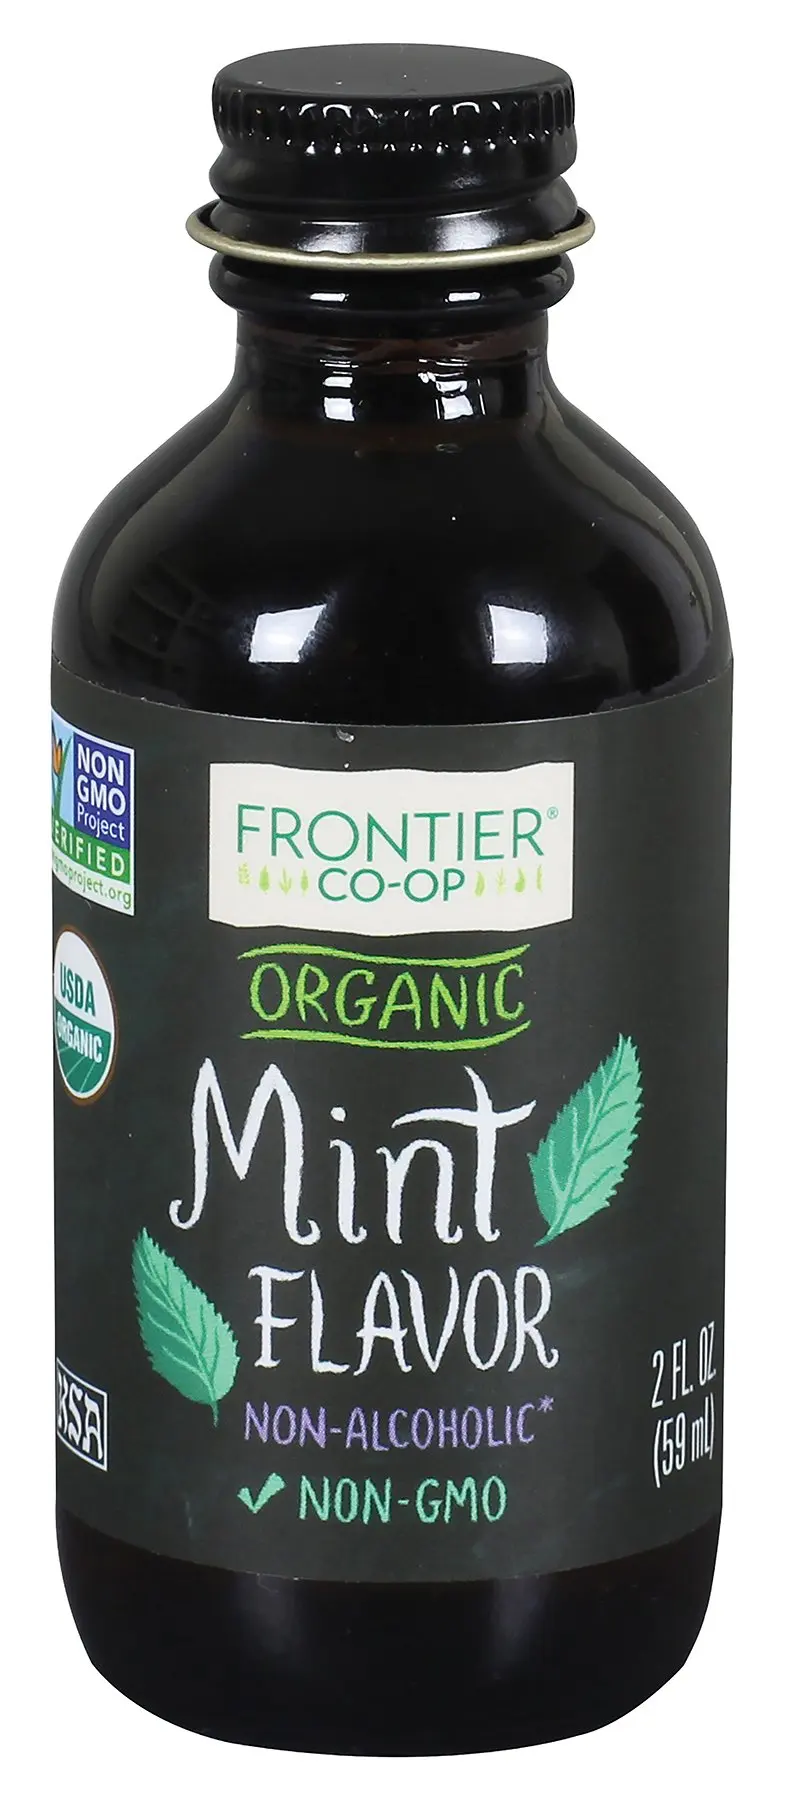 Frontier Mint Flavor Certified Organic, 2-Ounce Bottle. 